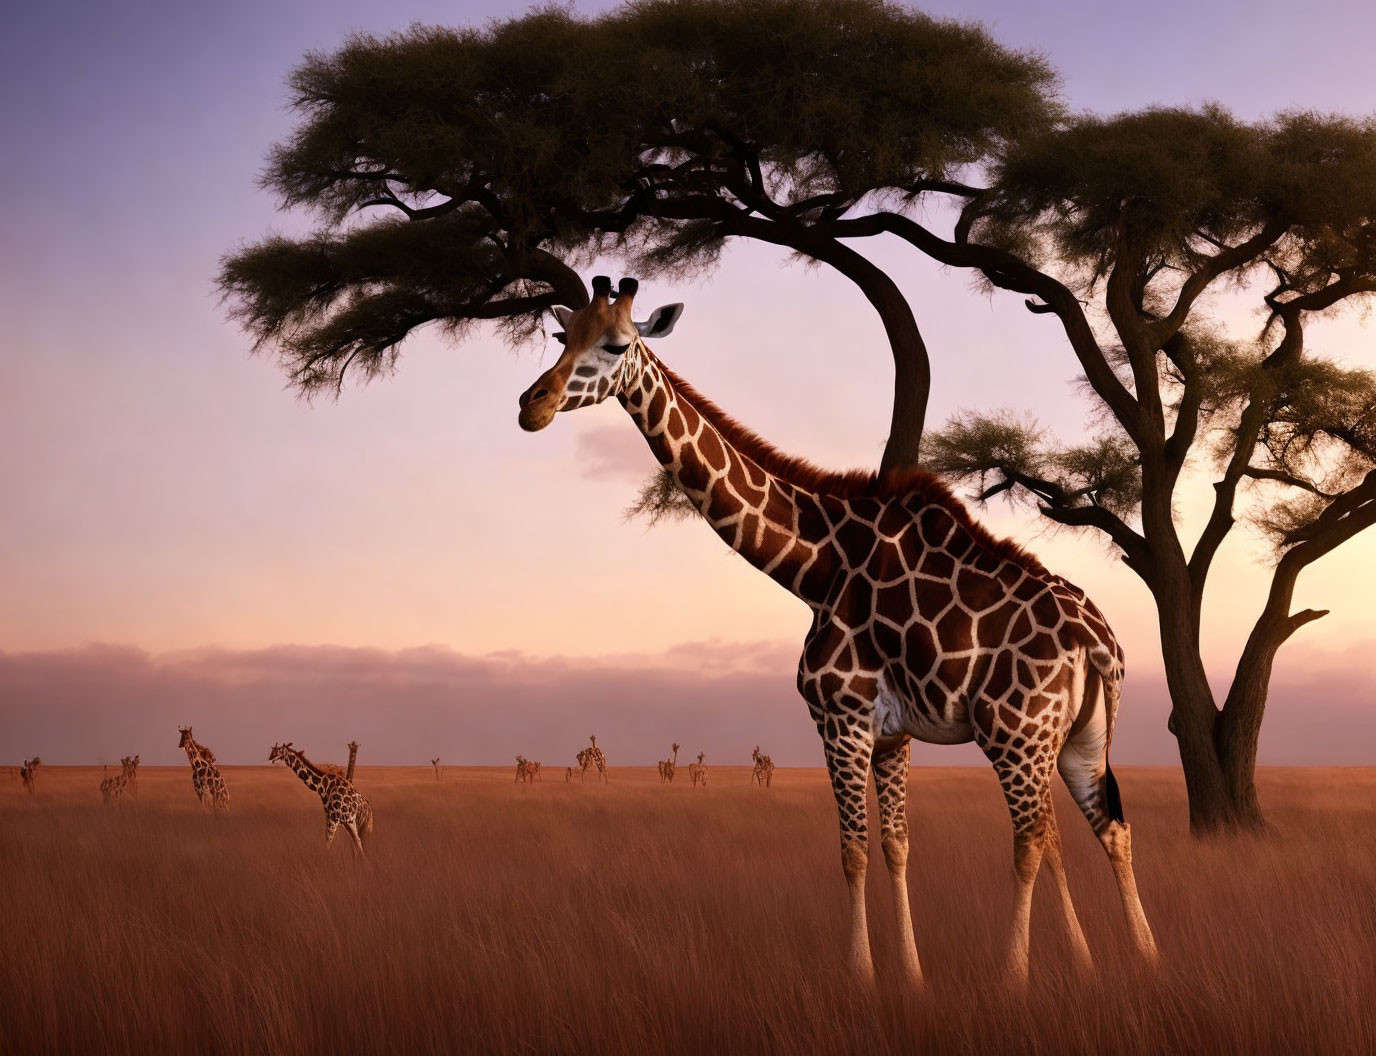 Savannah landscape with giraffes under vast sky and acacia tree